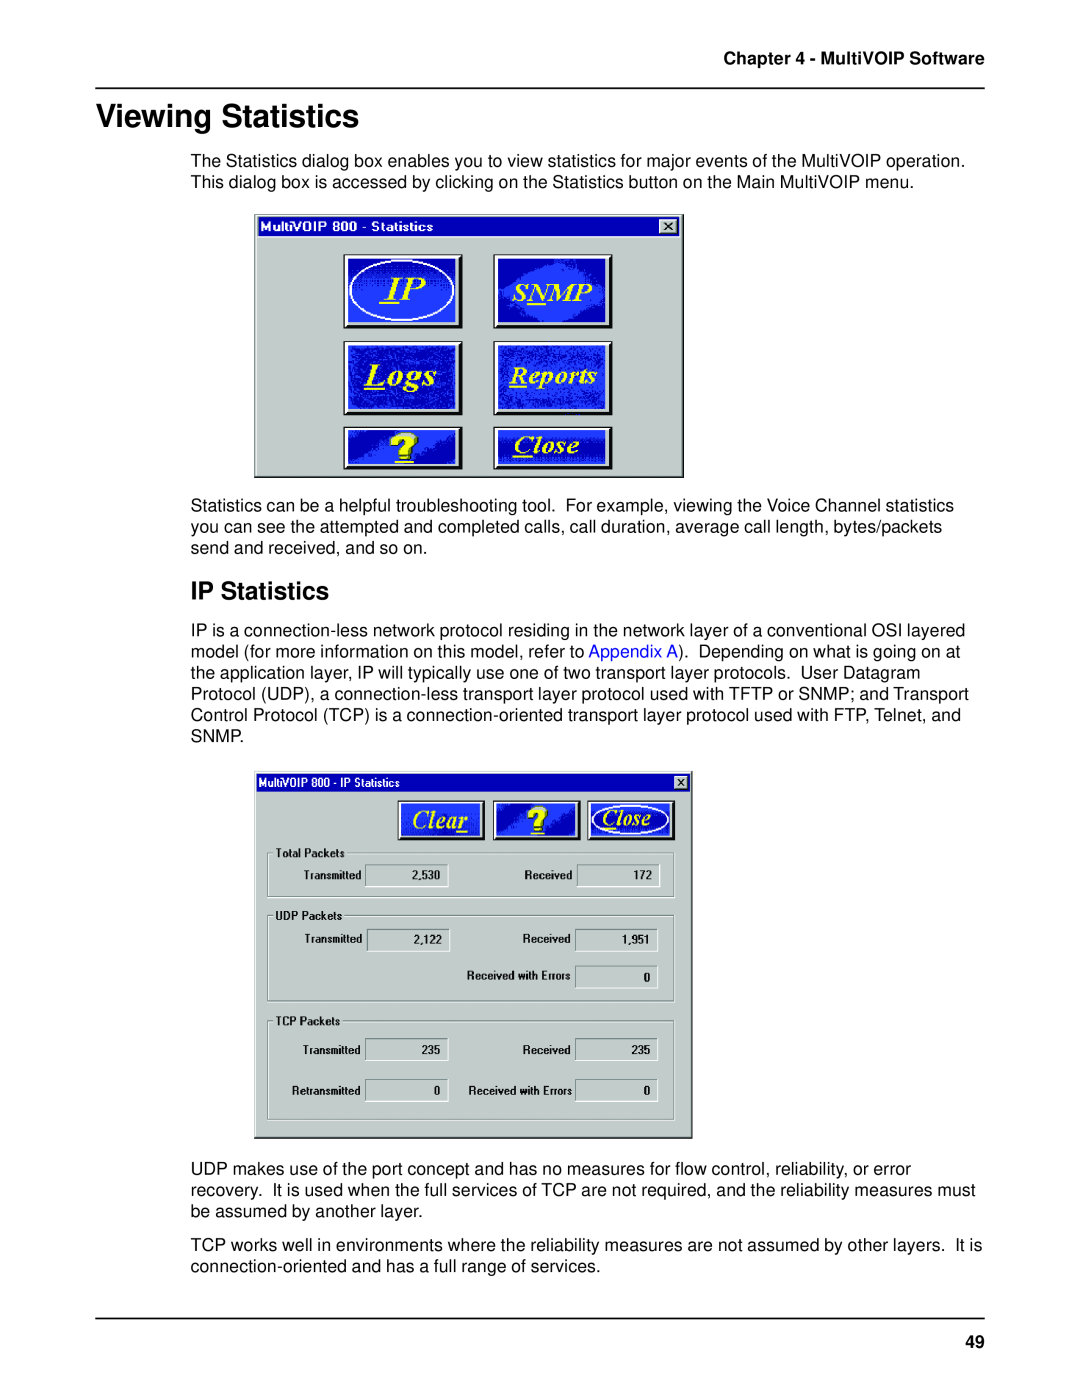 Multi-Tech Systems MVP 800 manual Viewing Statistics, IP Statistics, MultiVOIP Software 